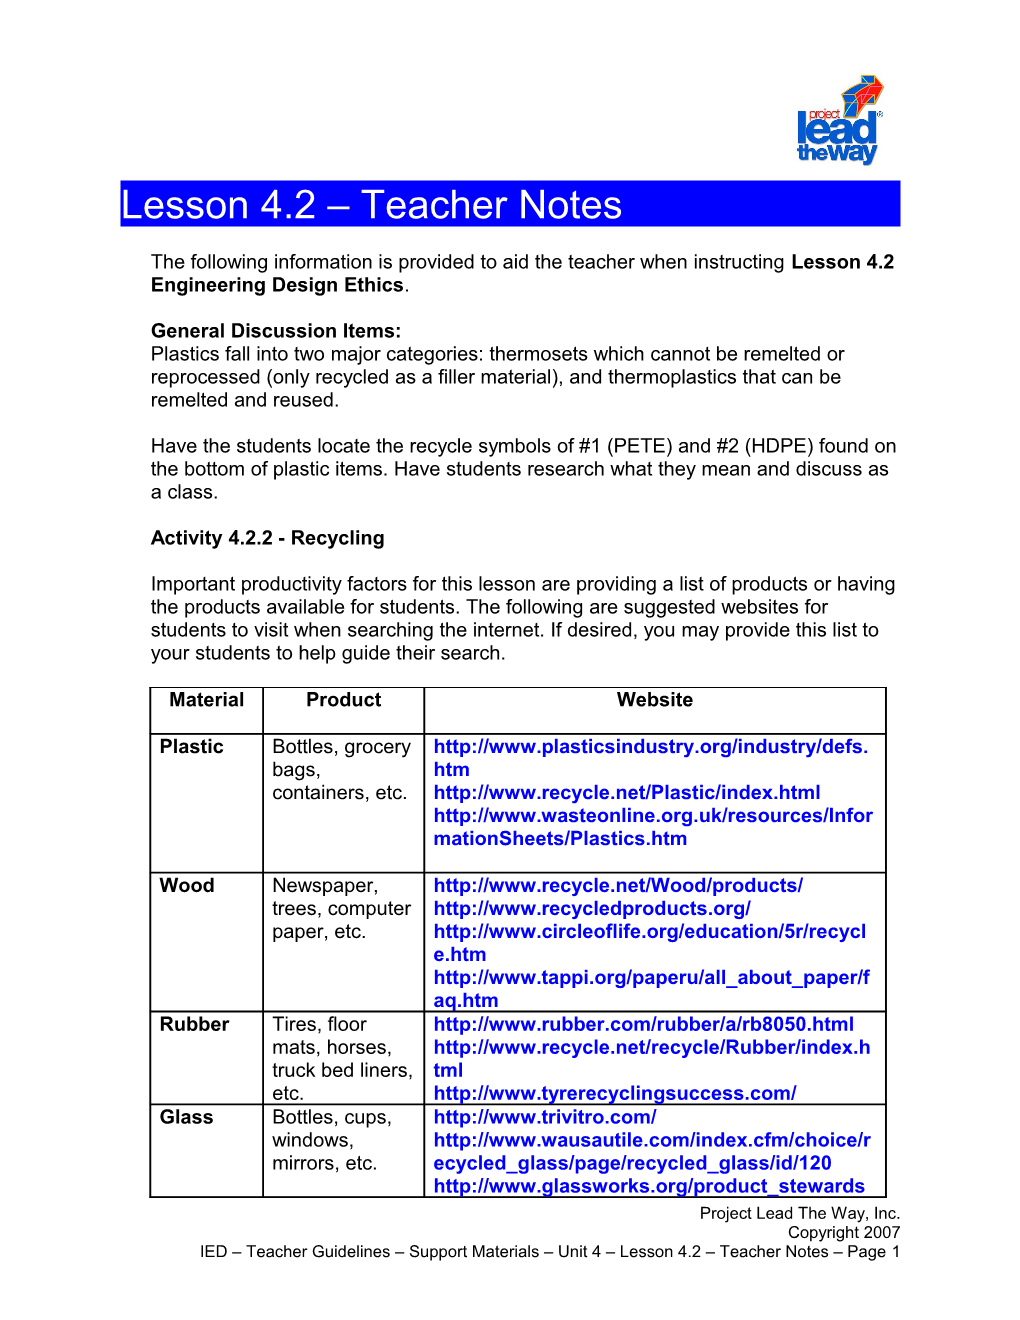 Lesson 4.2: Teacher Notes